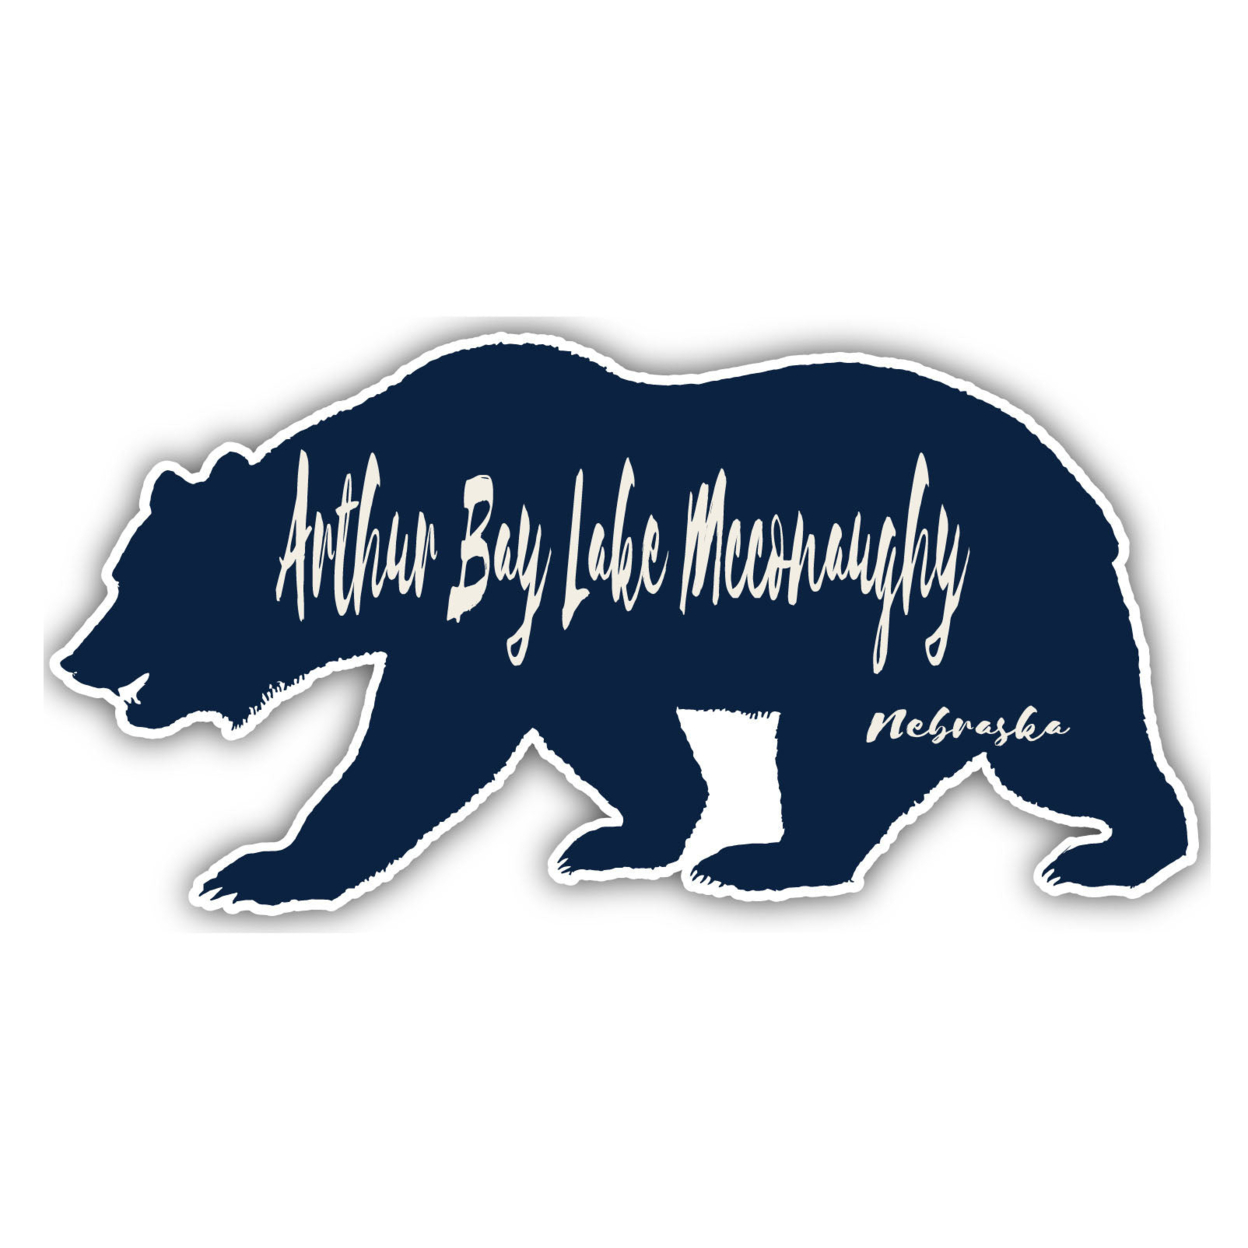 Arthur Bay Lake Mcconaughy Nebraska Souvenir Decorative Stickers (Choose Theme And Size) - 4-Pack, 6-Inch, Bear